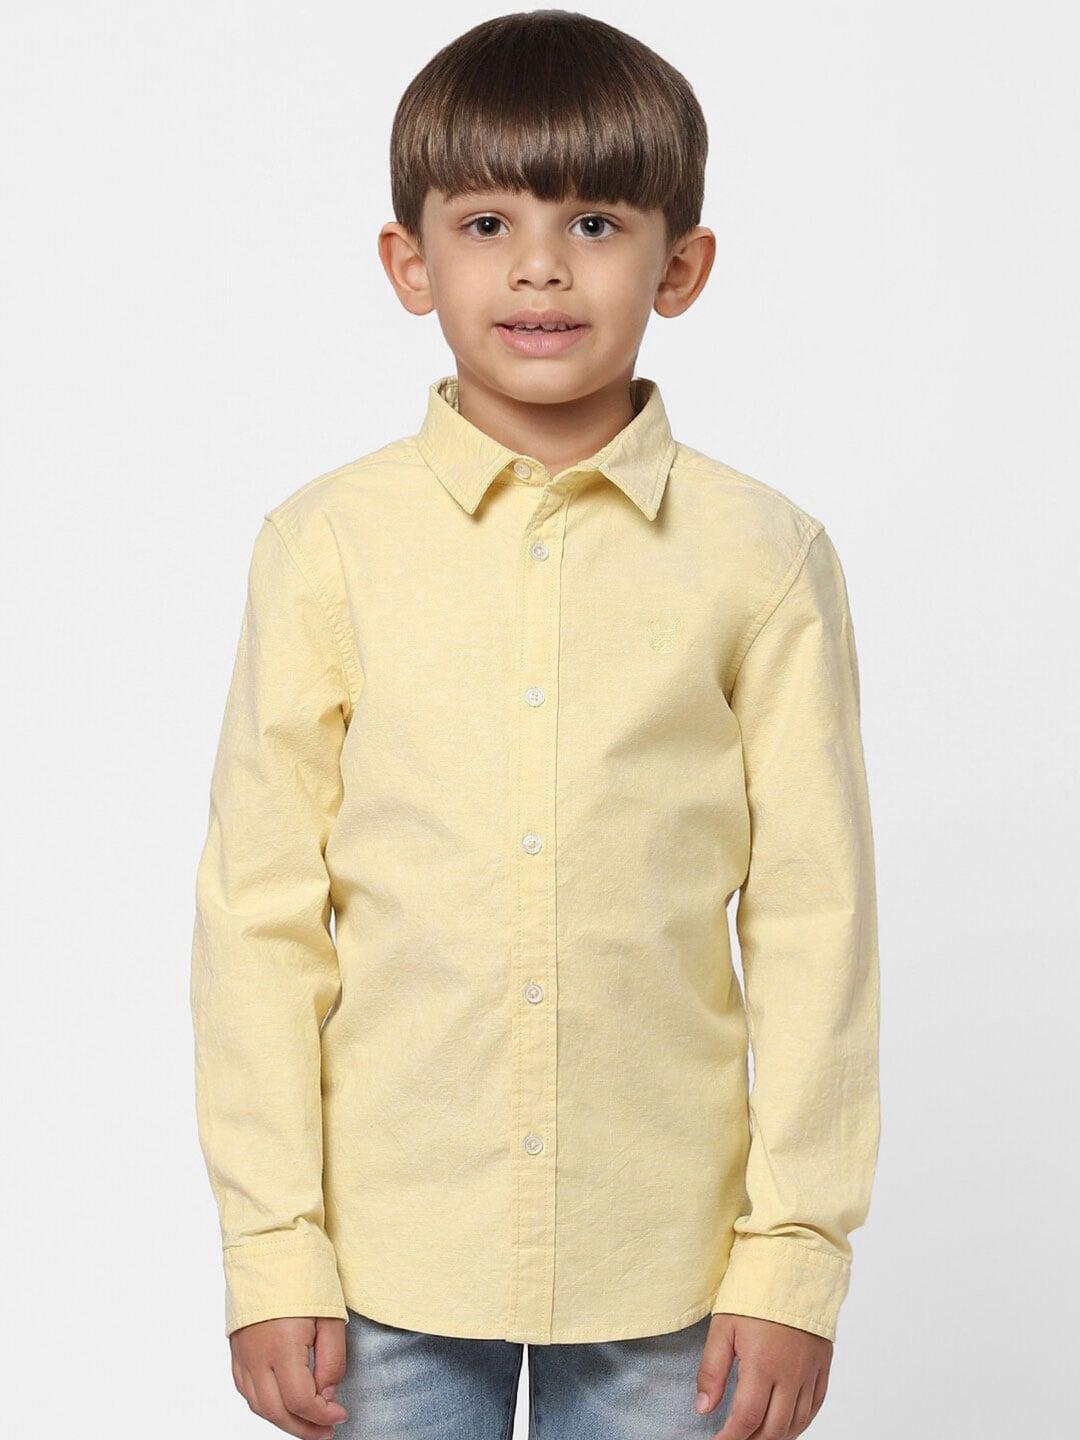 Jack & Jones Boys Yellow Solid Cotton Casual Shirt